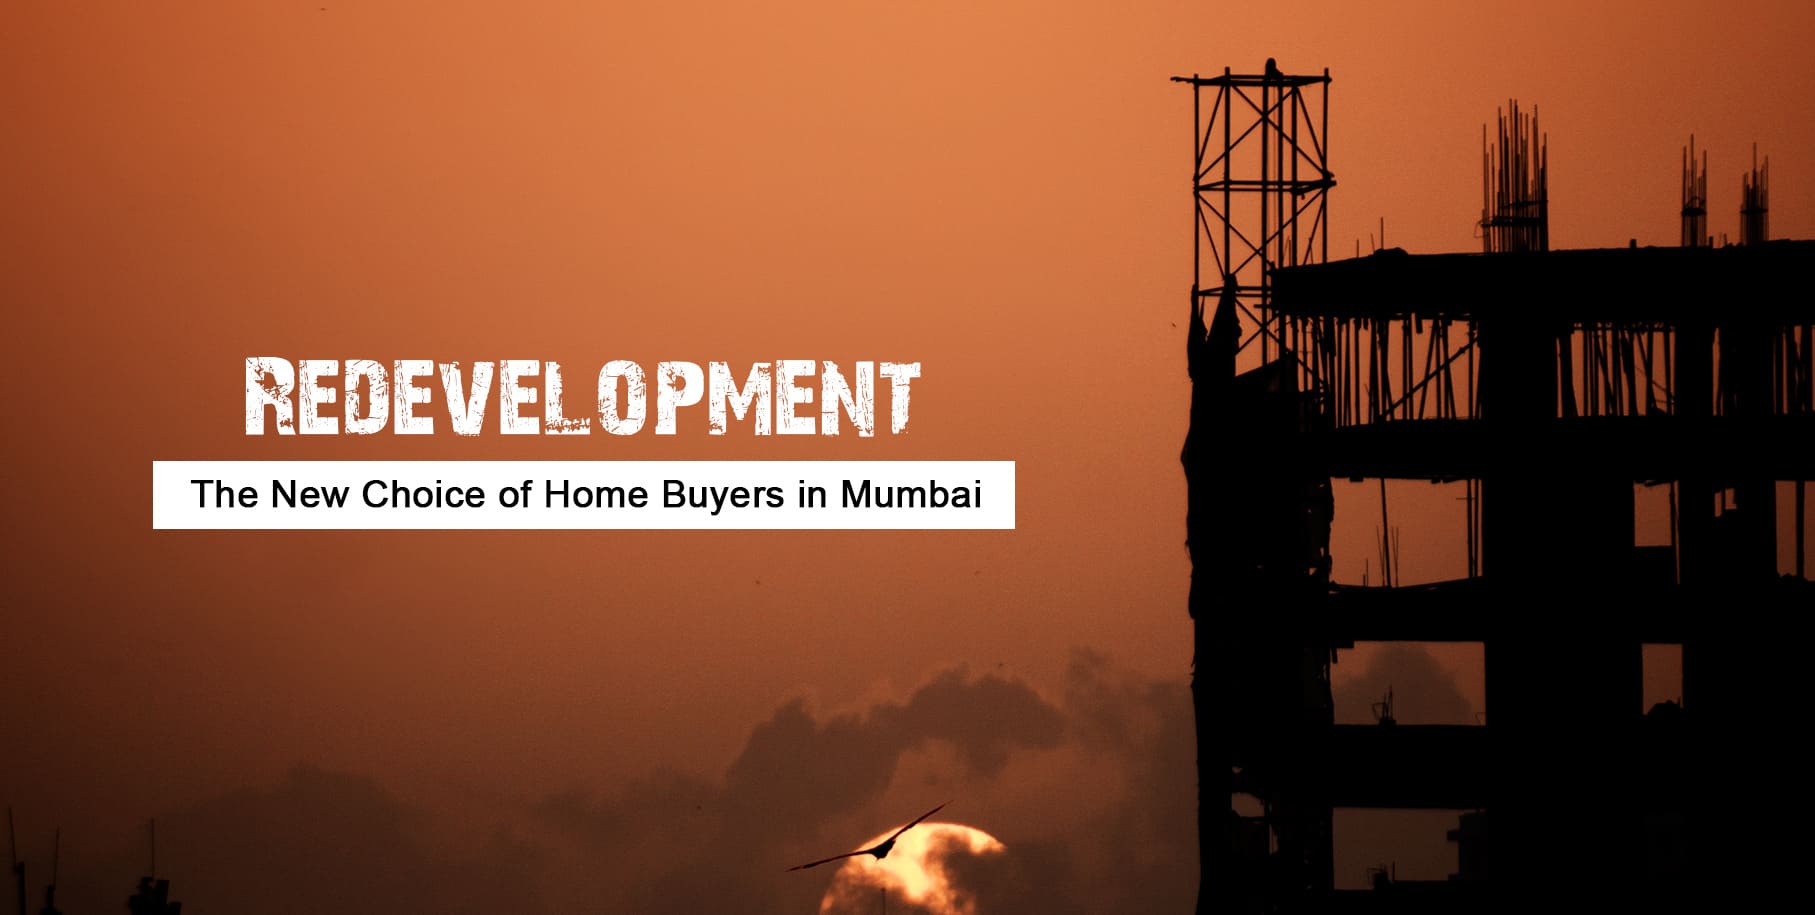 Redevelopment – The New Choice of Home Buyers in Mumbai